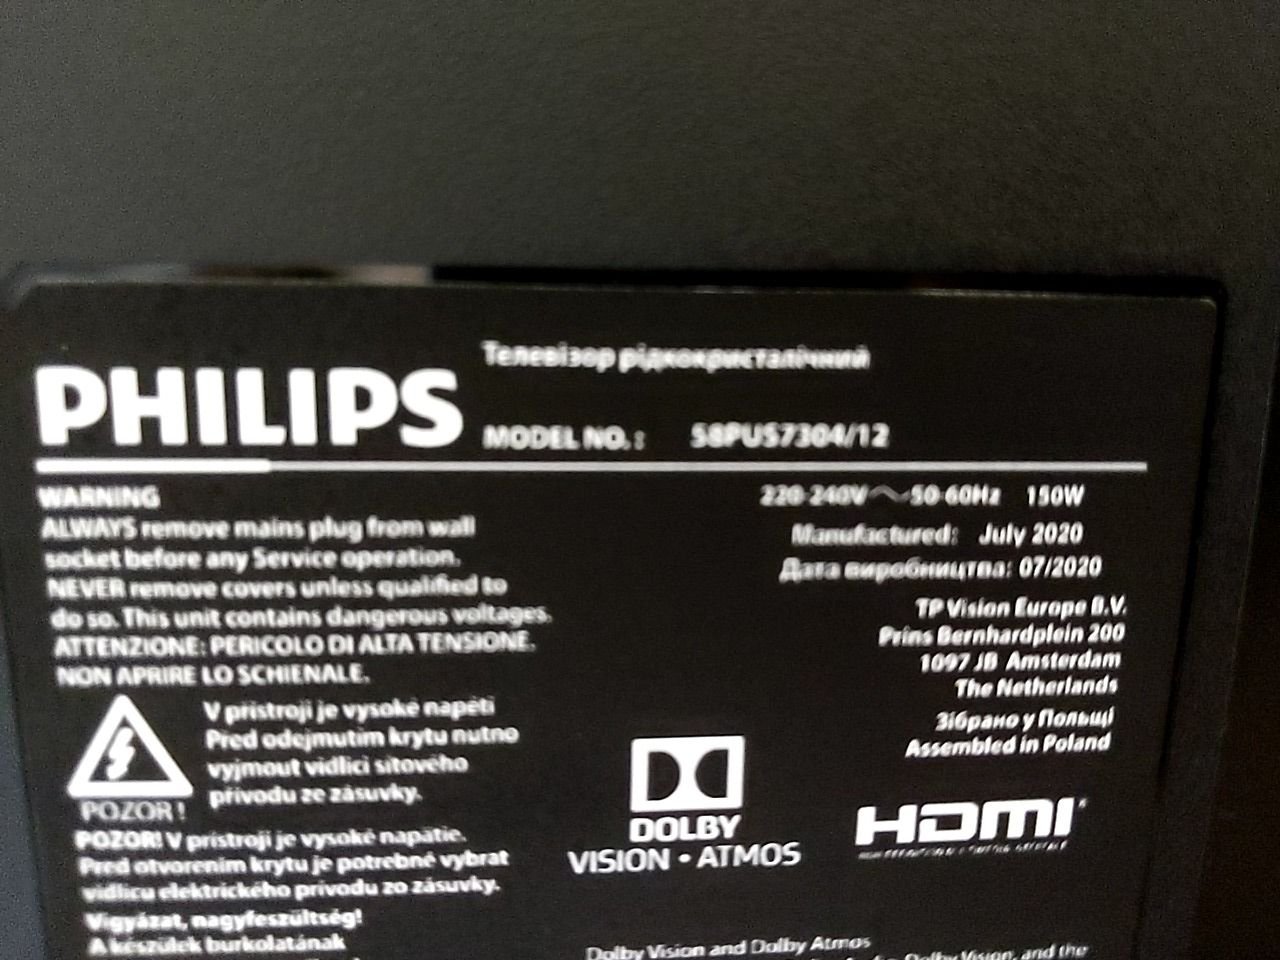 LED TV Philips 58PUS7304/12